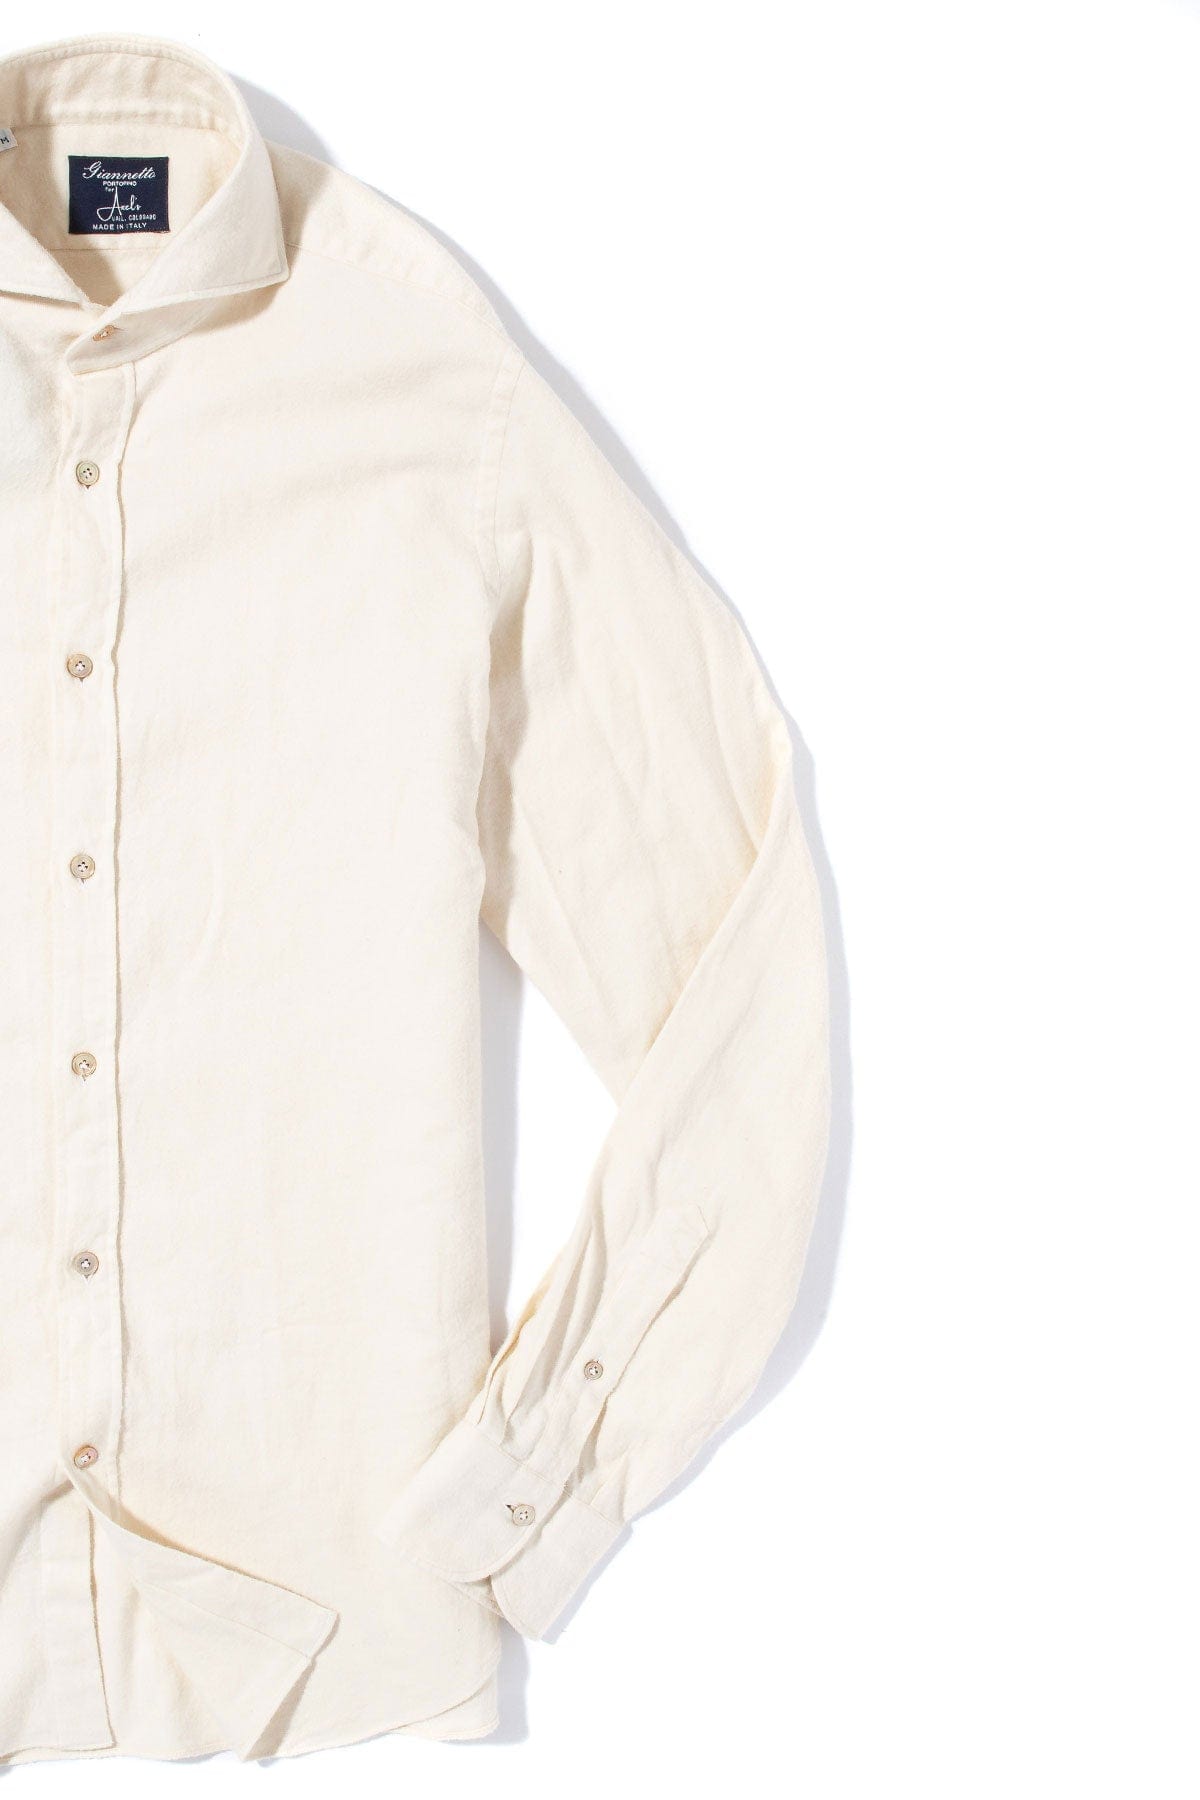 Brawley Cotton Flannel in White - AXEL'S